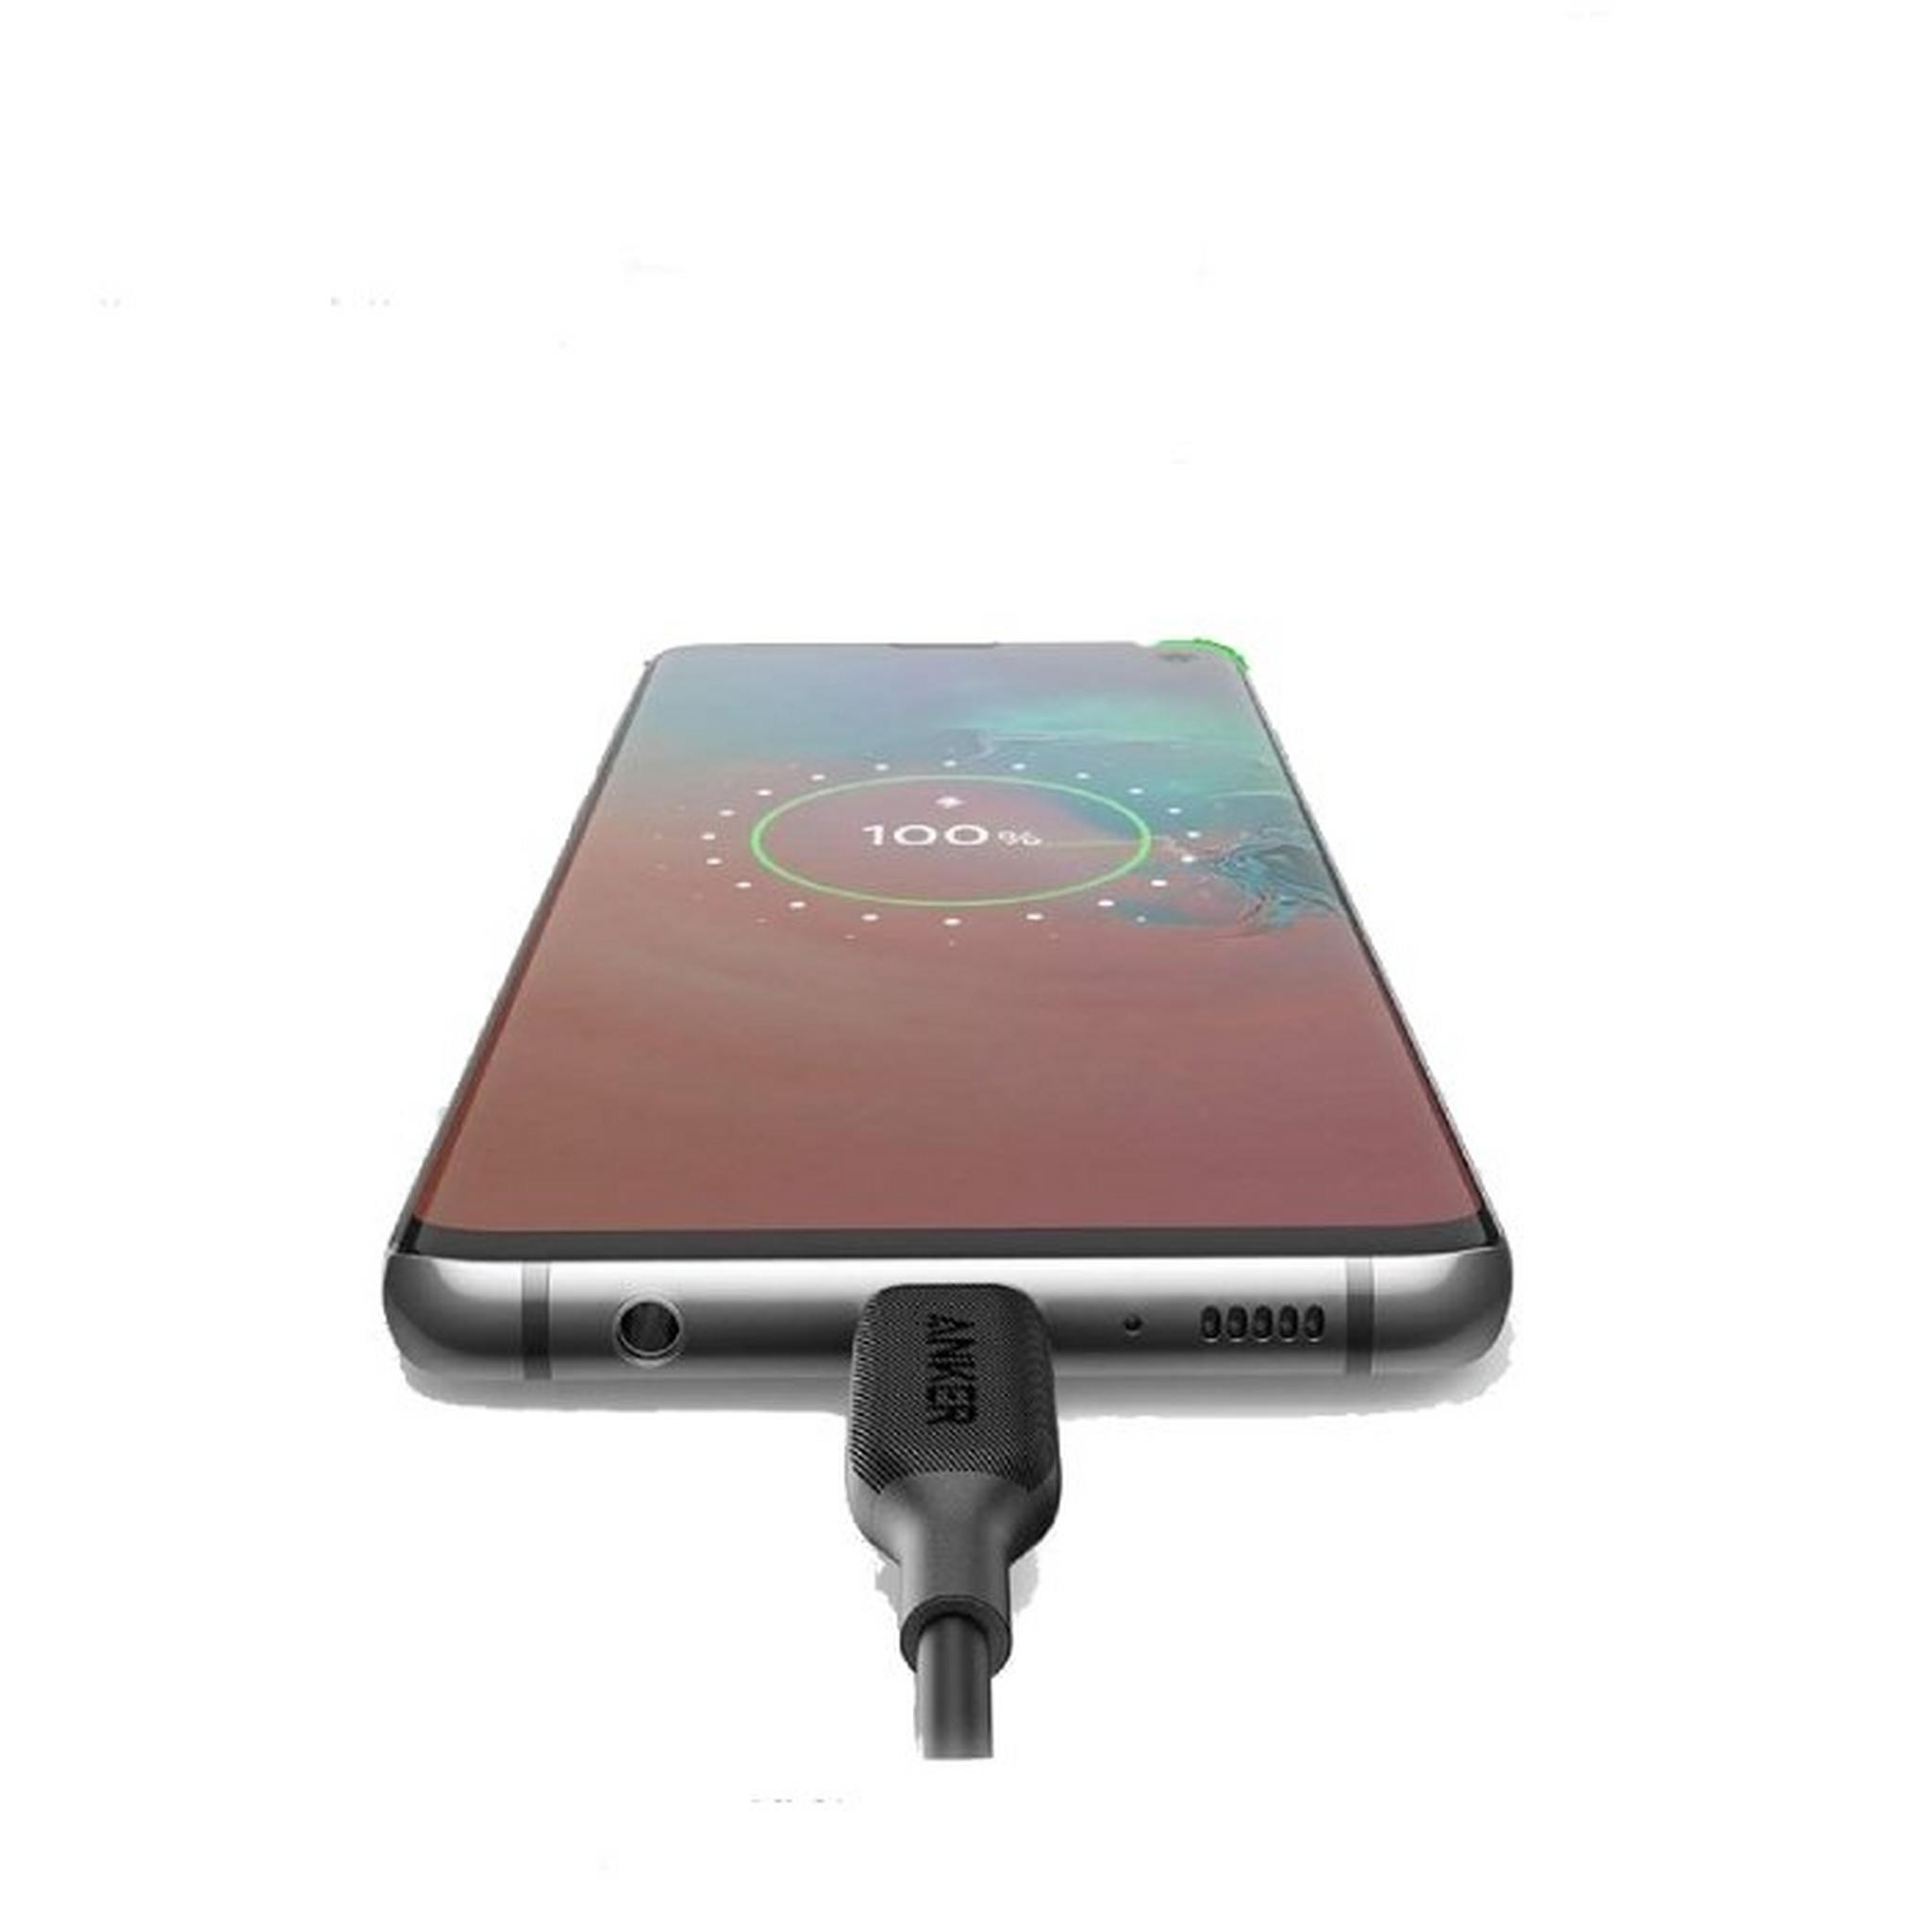 Anker PowerLine + III USB-C to USB-C Cable (3 Feet) - Black